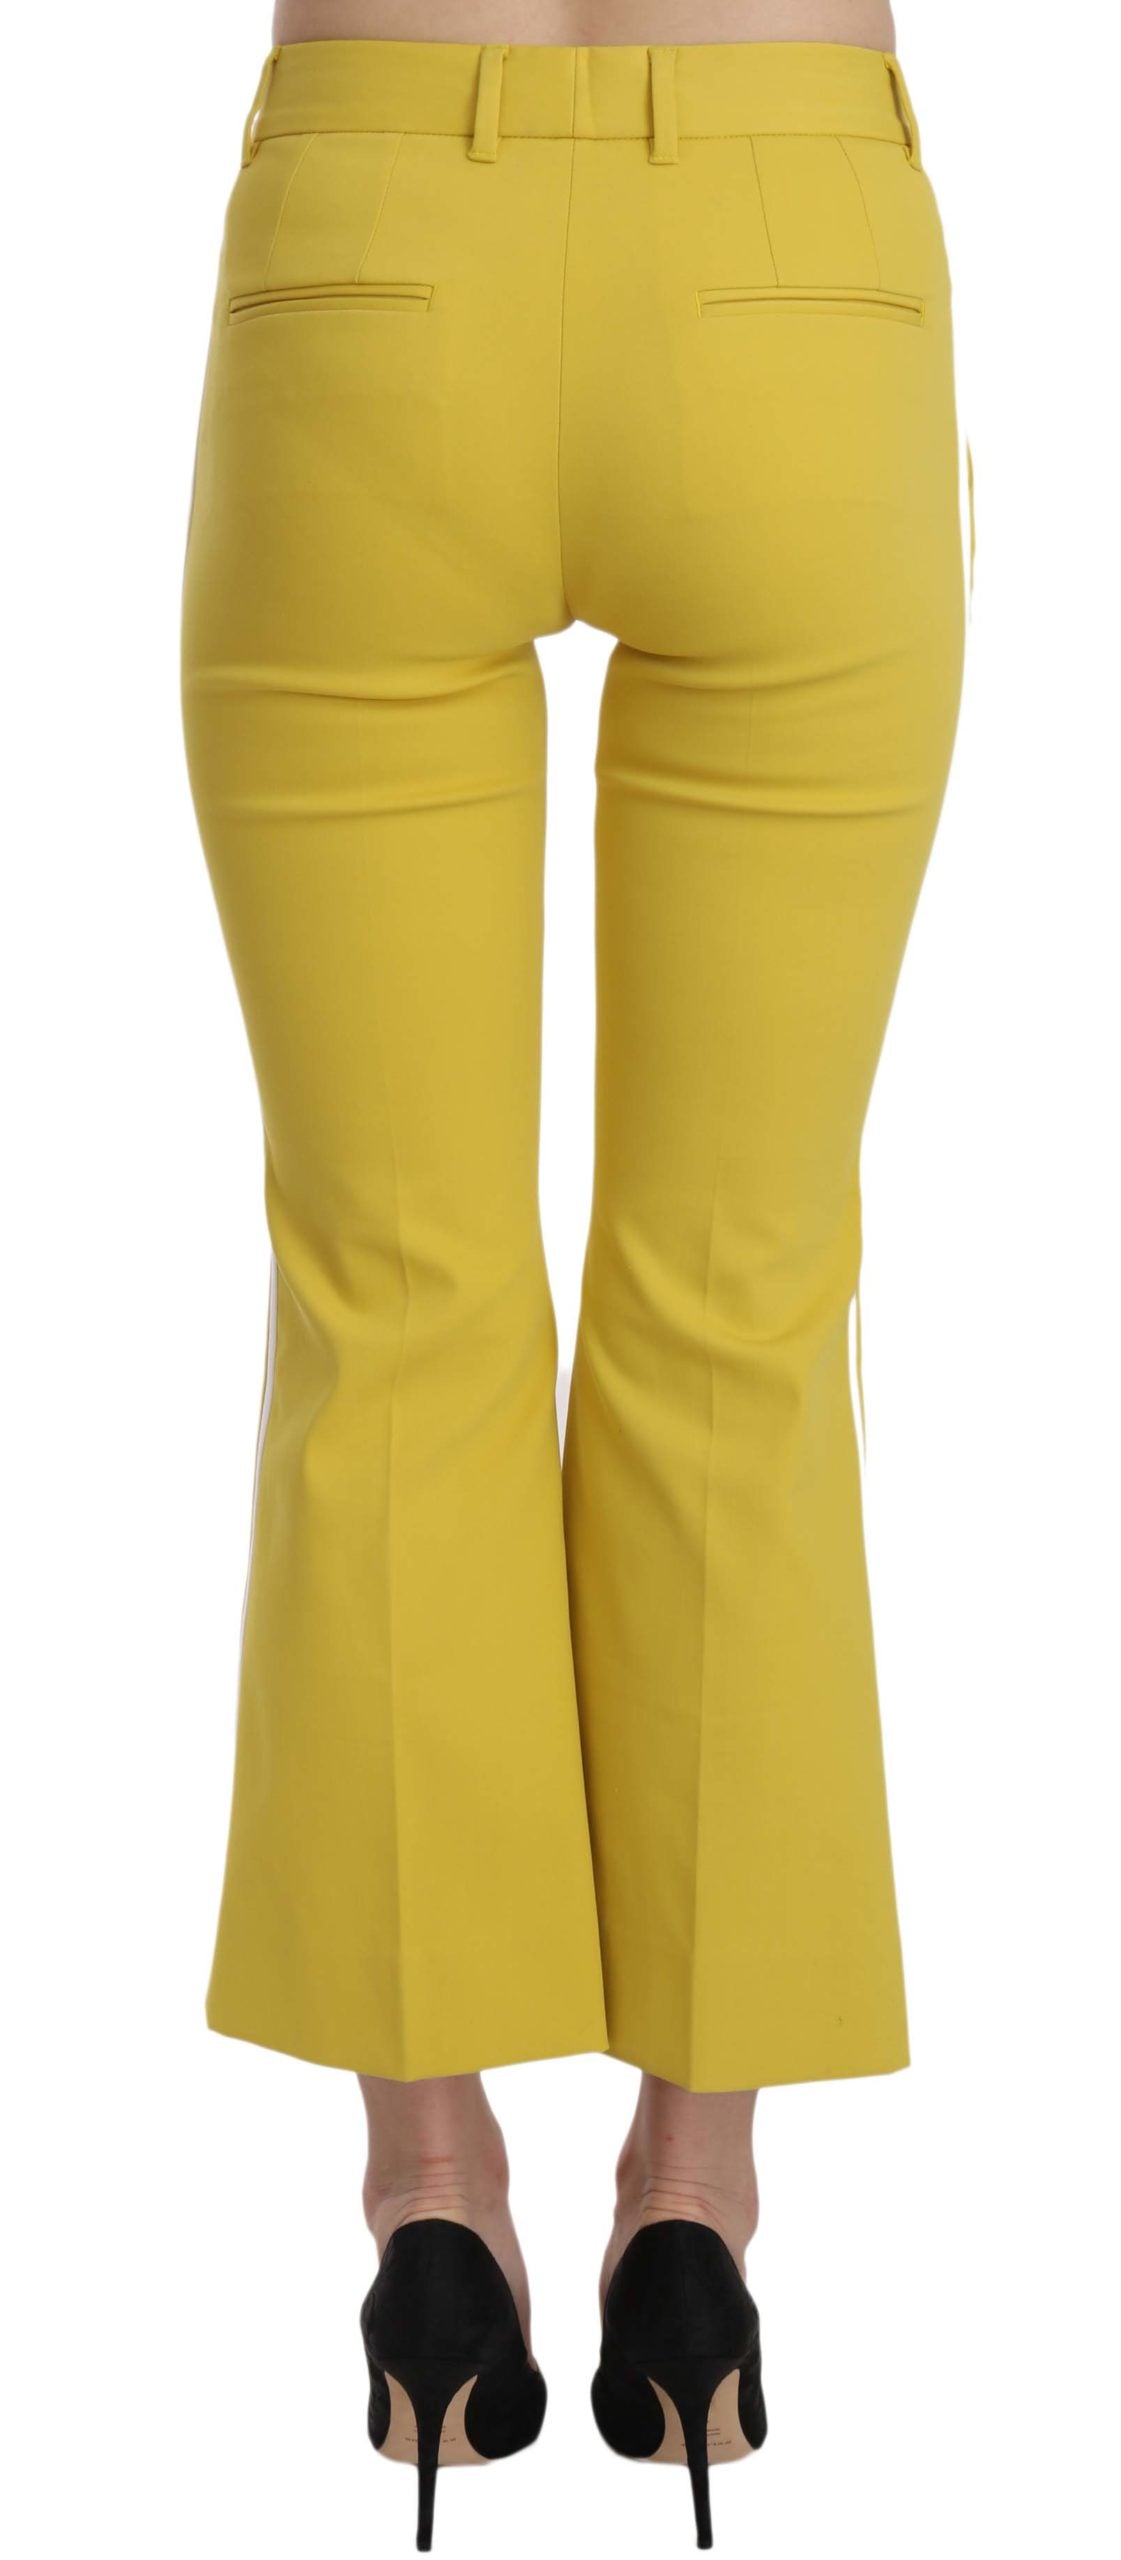 Fashionsarah.com Fashionsarah.com Dolce & Gabbana Chic Yellow Flare Pants for Elegant Evenings